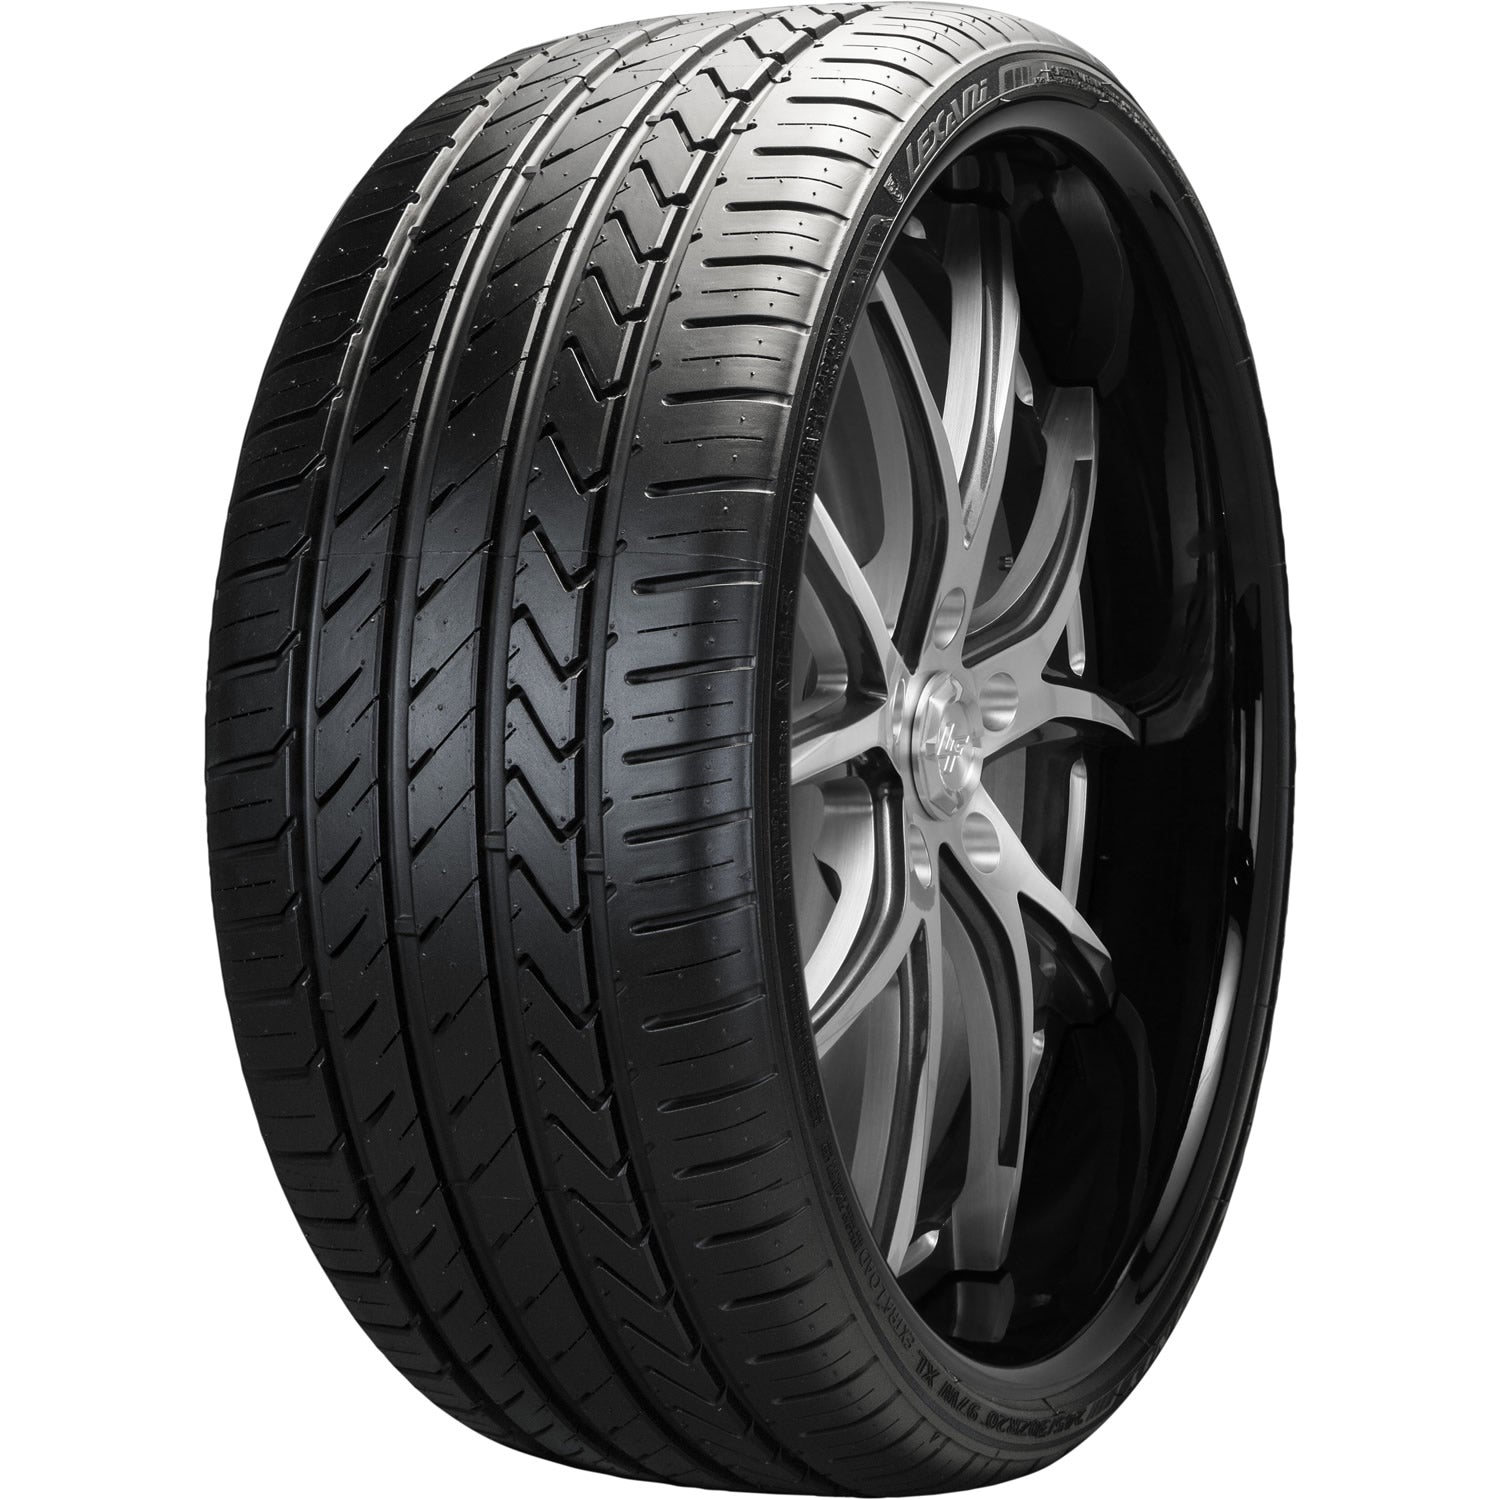 LEXANI LX-TWENTY 285/35ZR22 (29.9X11.4R 22) Tires